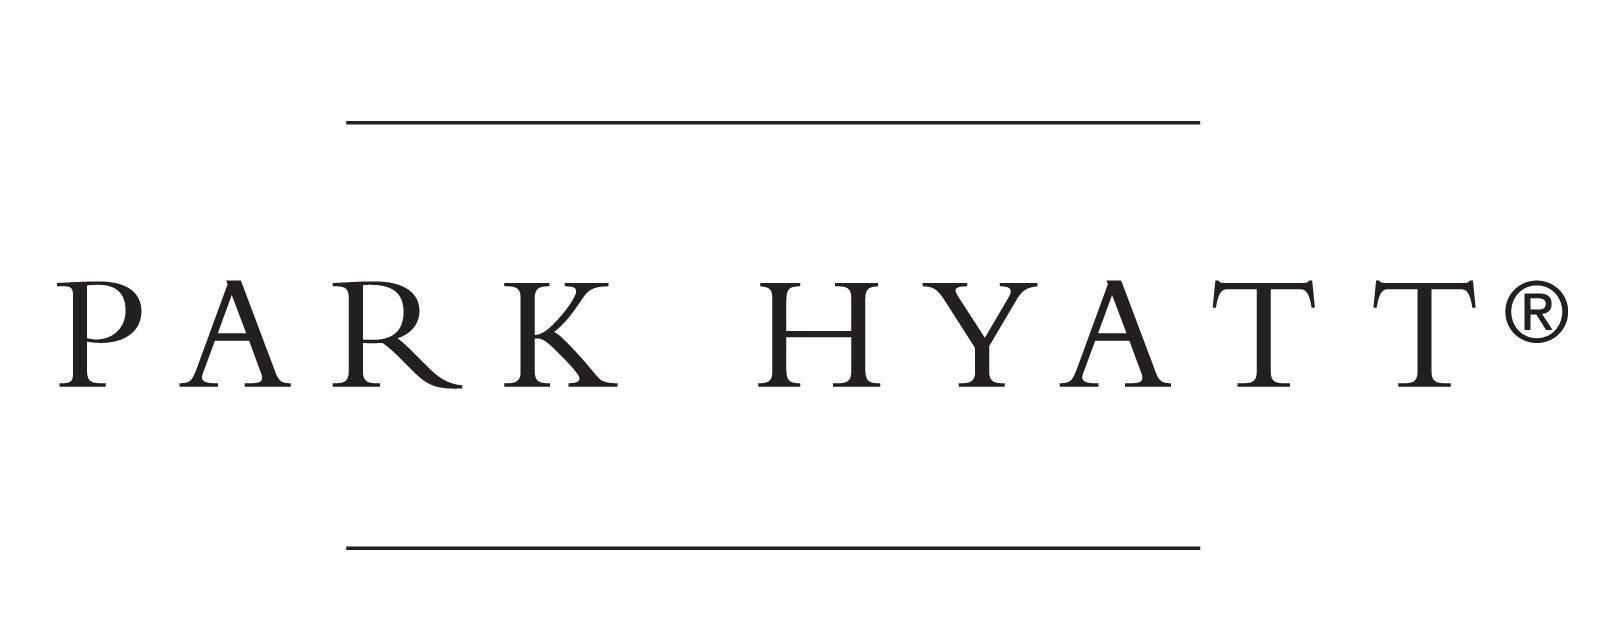 Hyatt Logo - Image - Park hyatt logo.jpg | Logopedia | FANDOM powered by Wikia